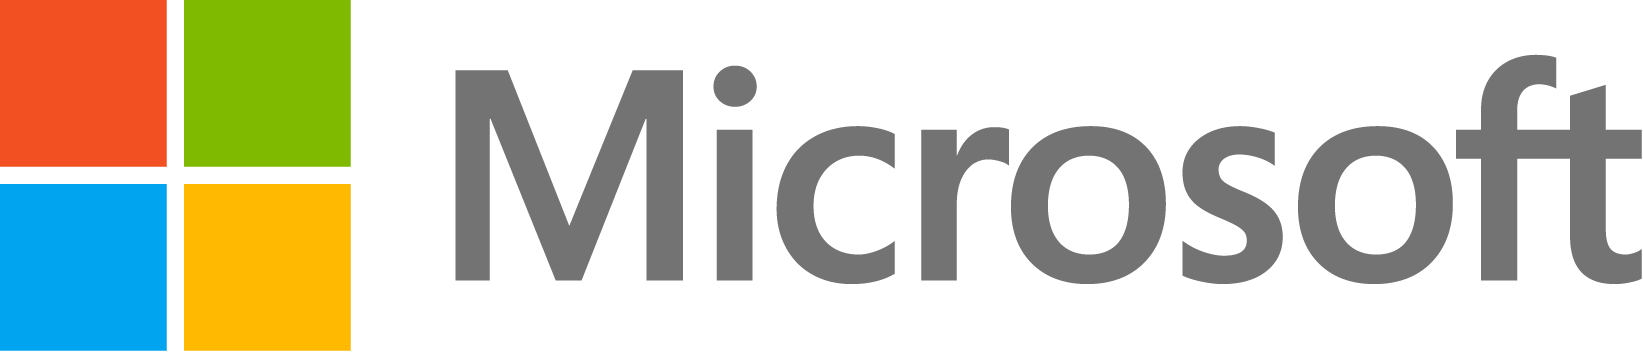 Microsoft - Logo 2012.png